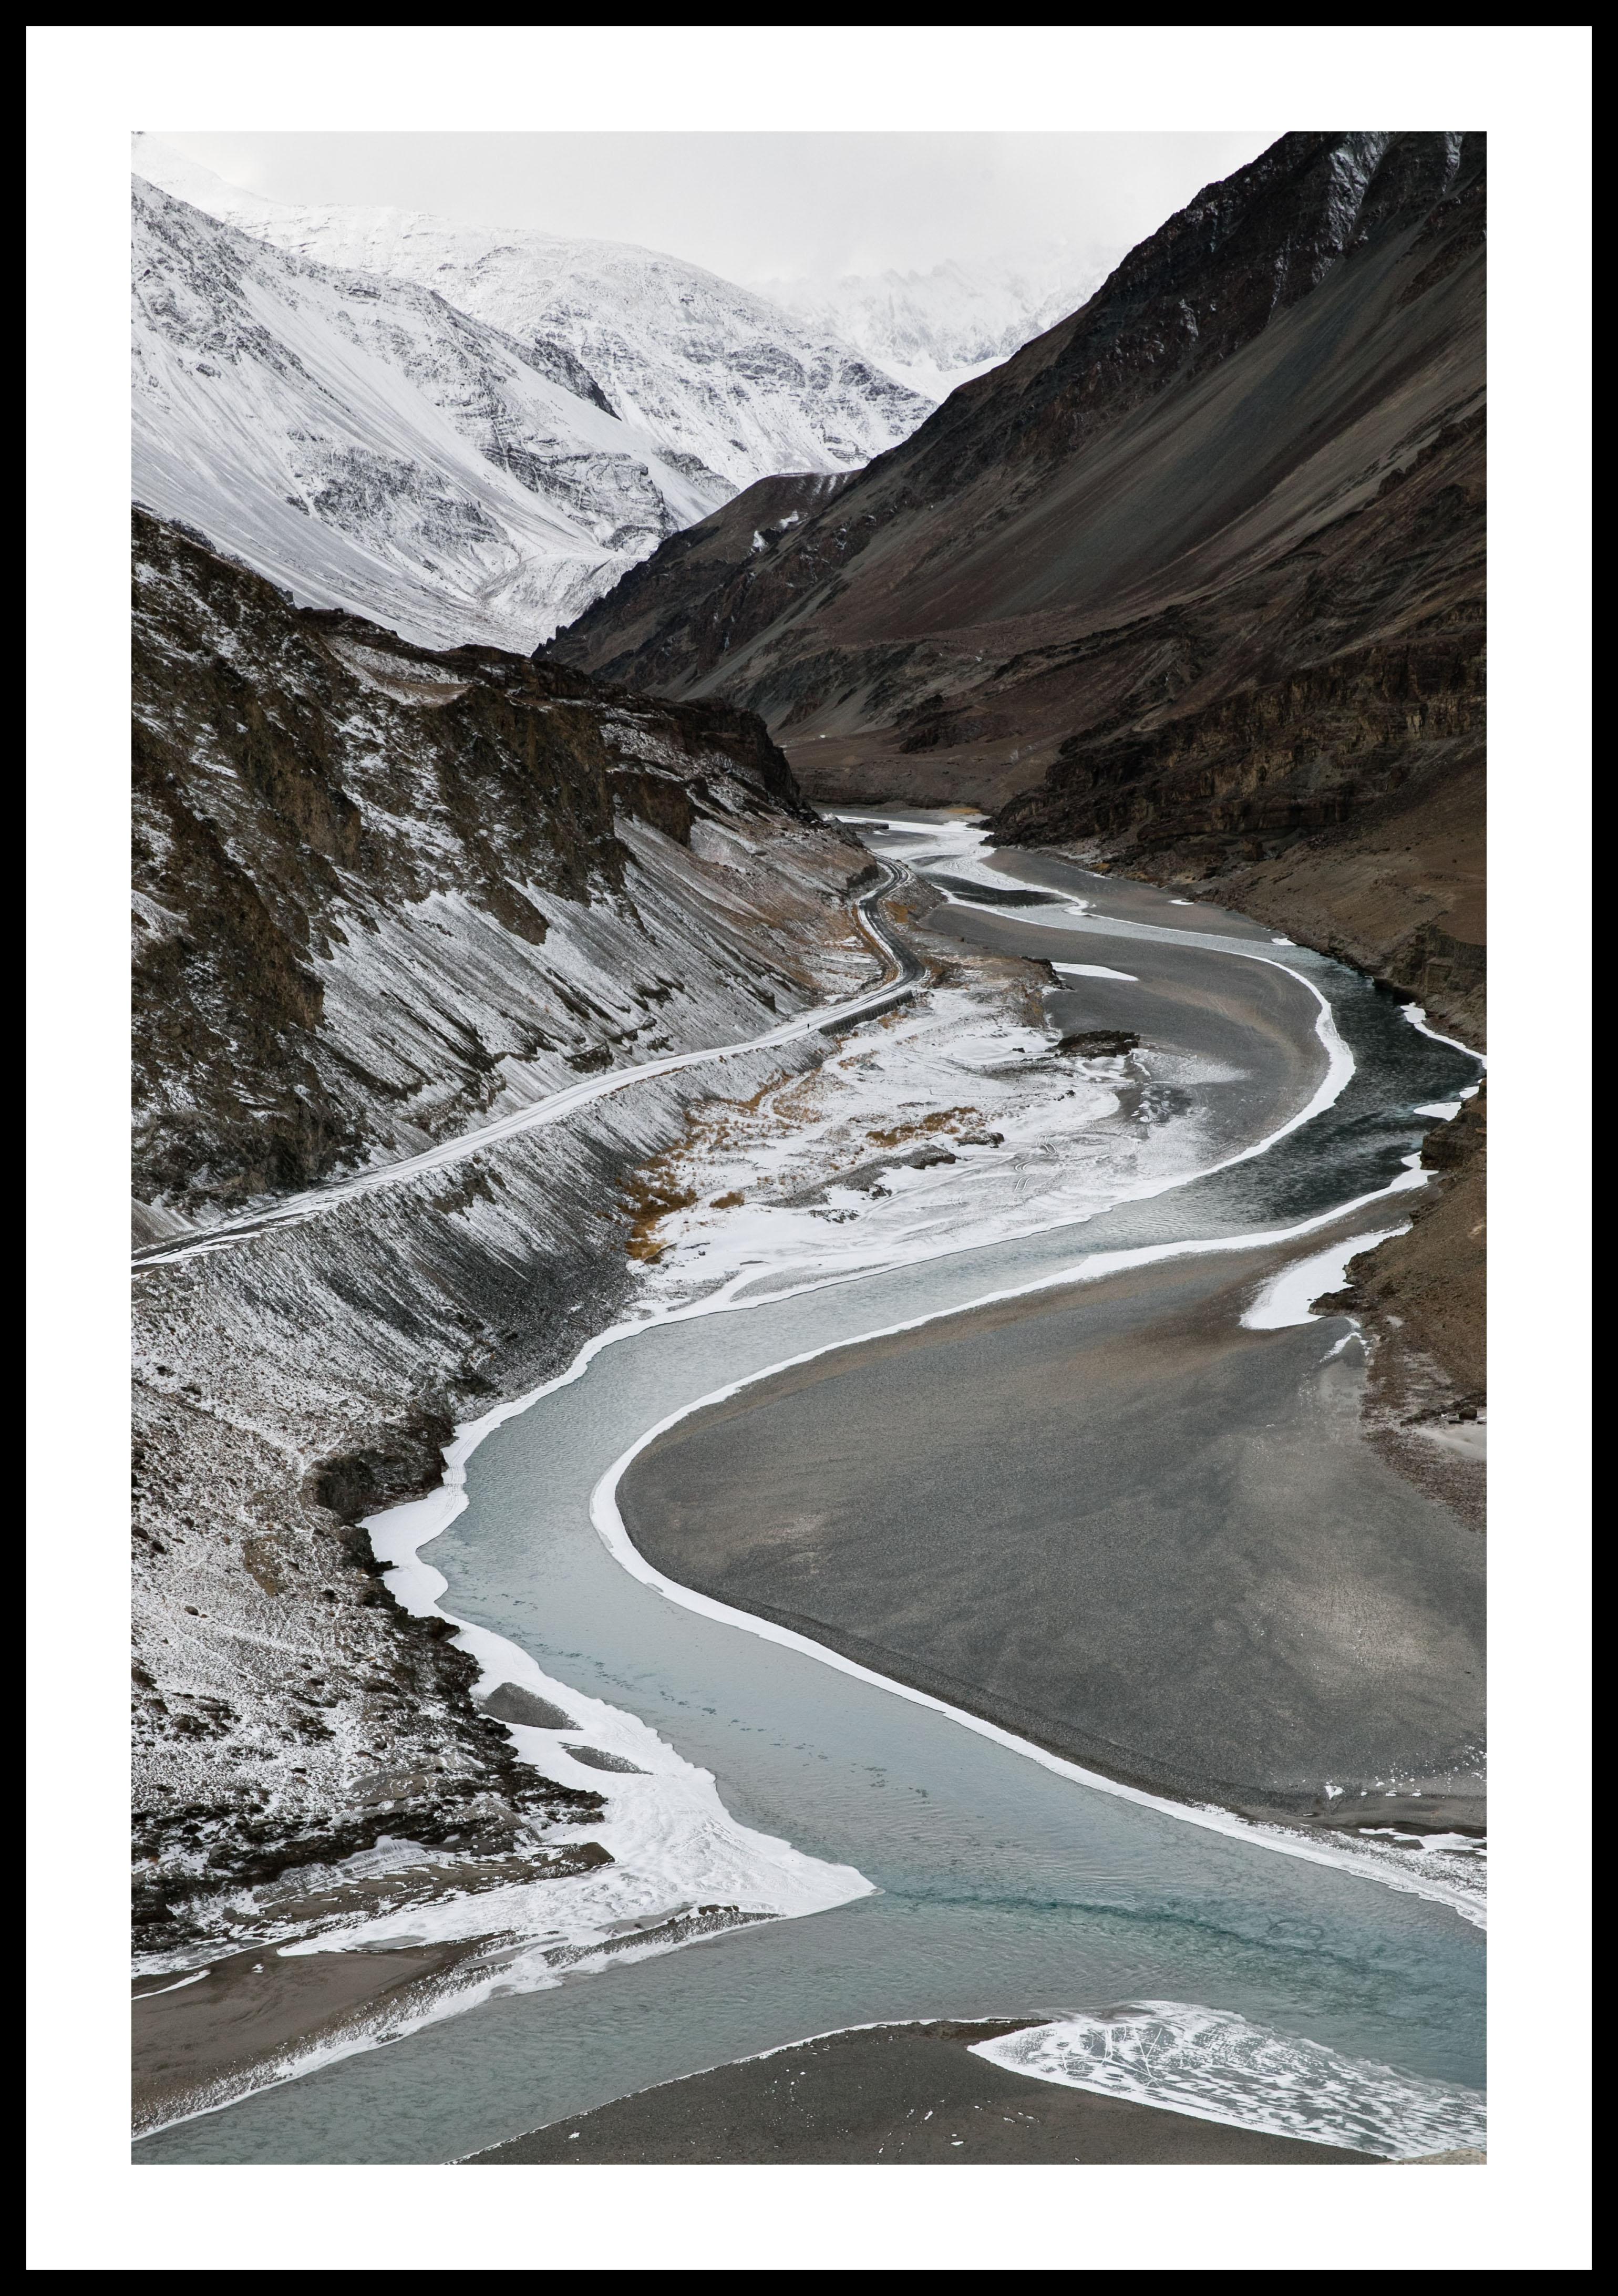 Paper “Ladakh” Photography, 2018, by Brazilian photographer Chico Kfouri